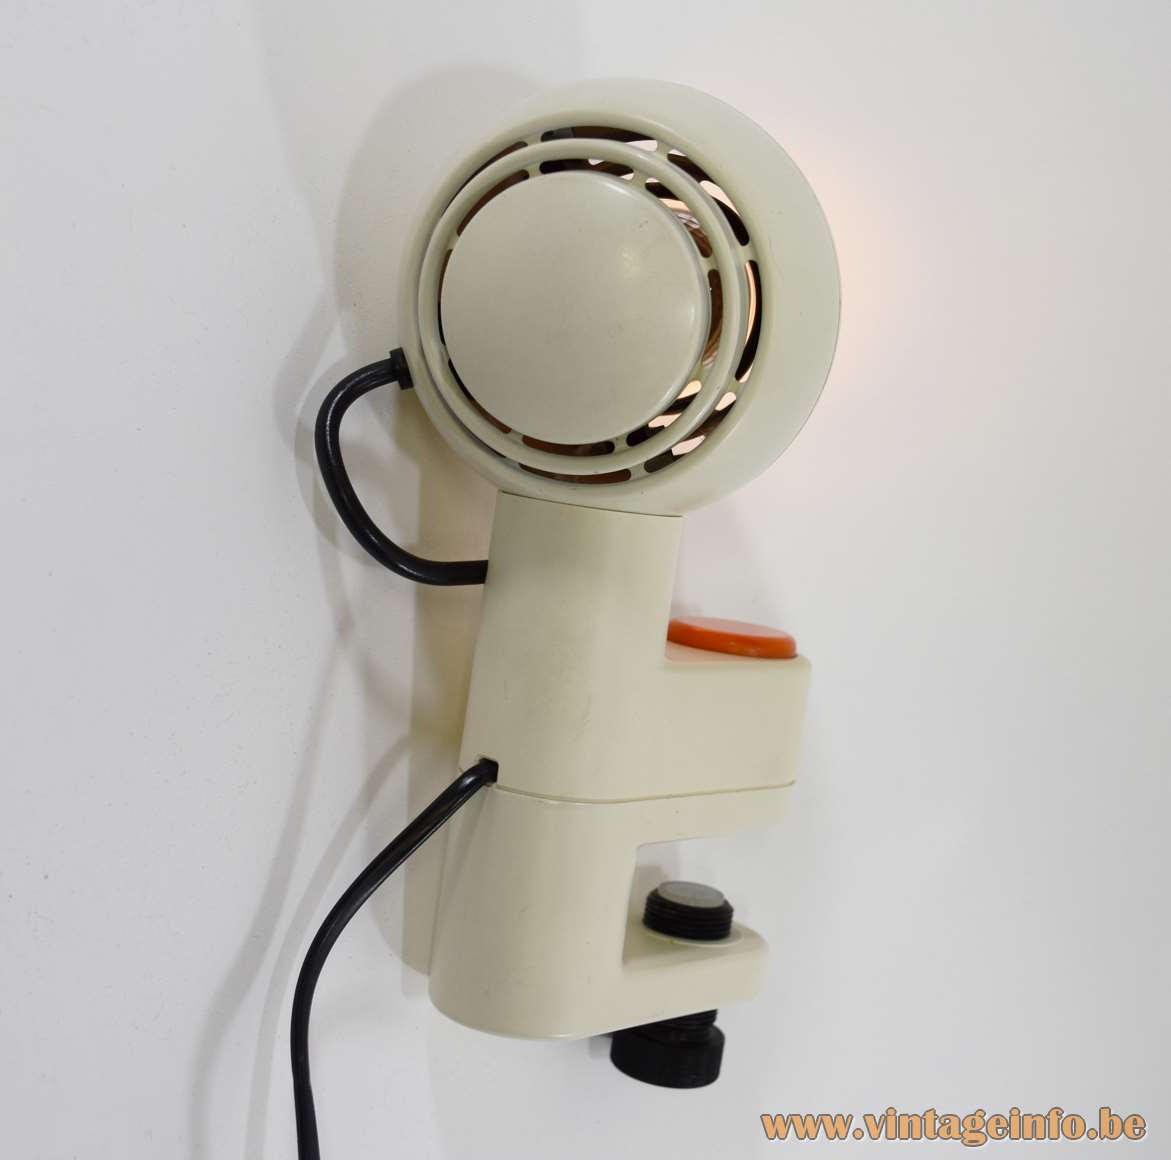 Osram Concentra Agilo clamp lamp white plastic magnetic globe orange round switch Schlagheck Schultes Design 1977